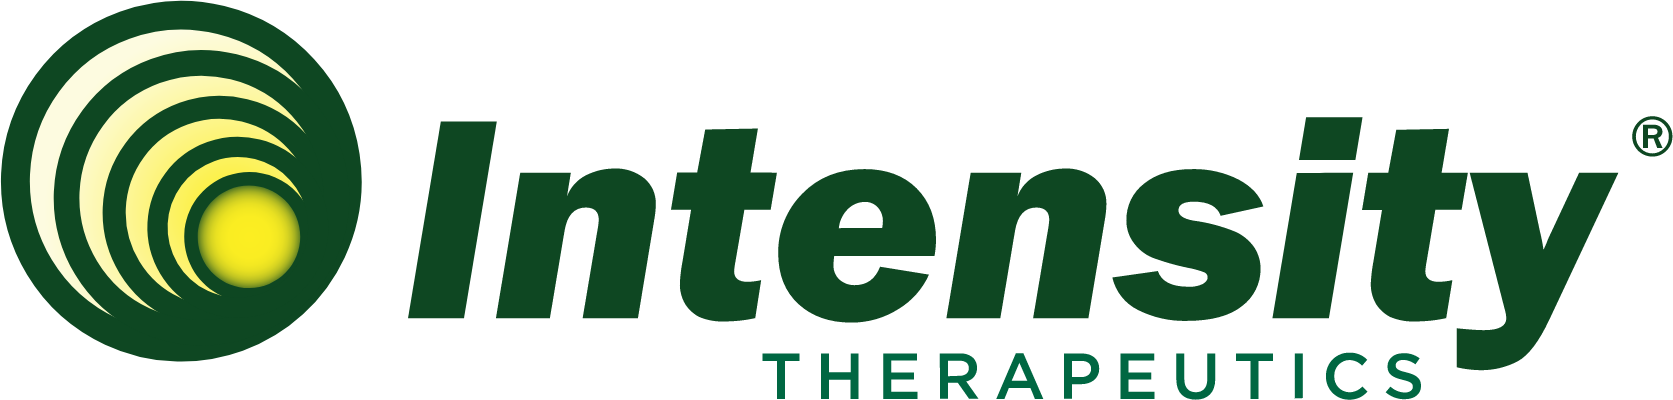 Intensity Therapeutics logo large (transparent PNG)